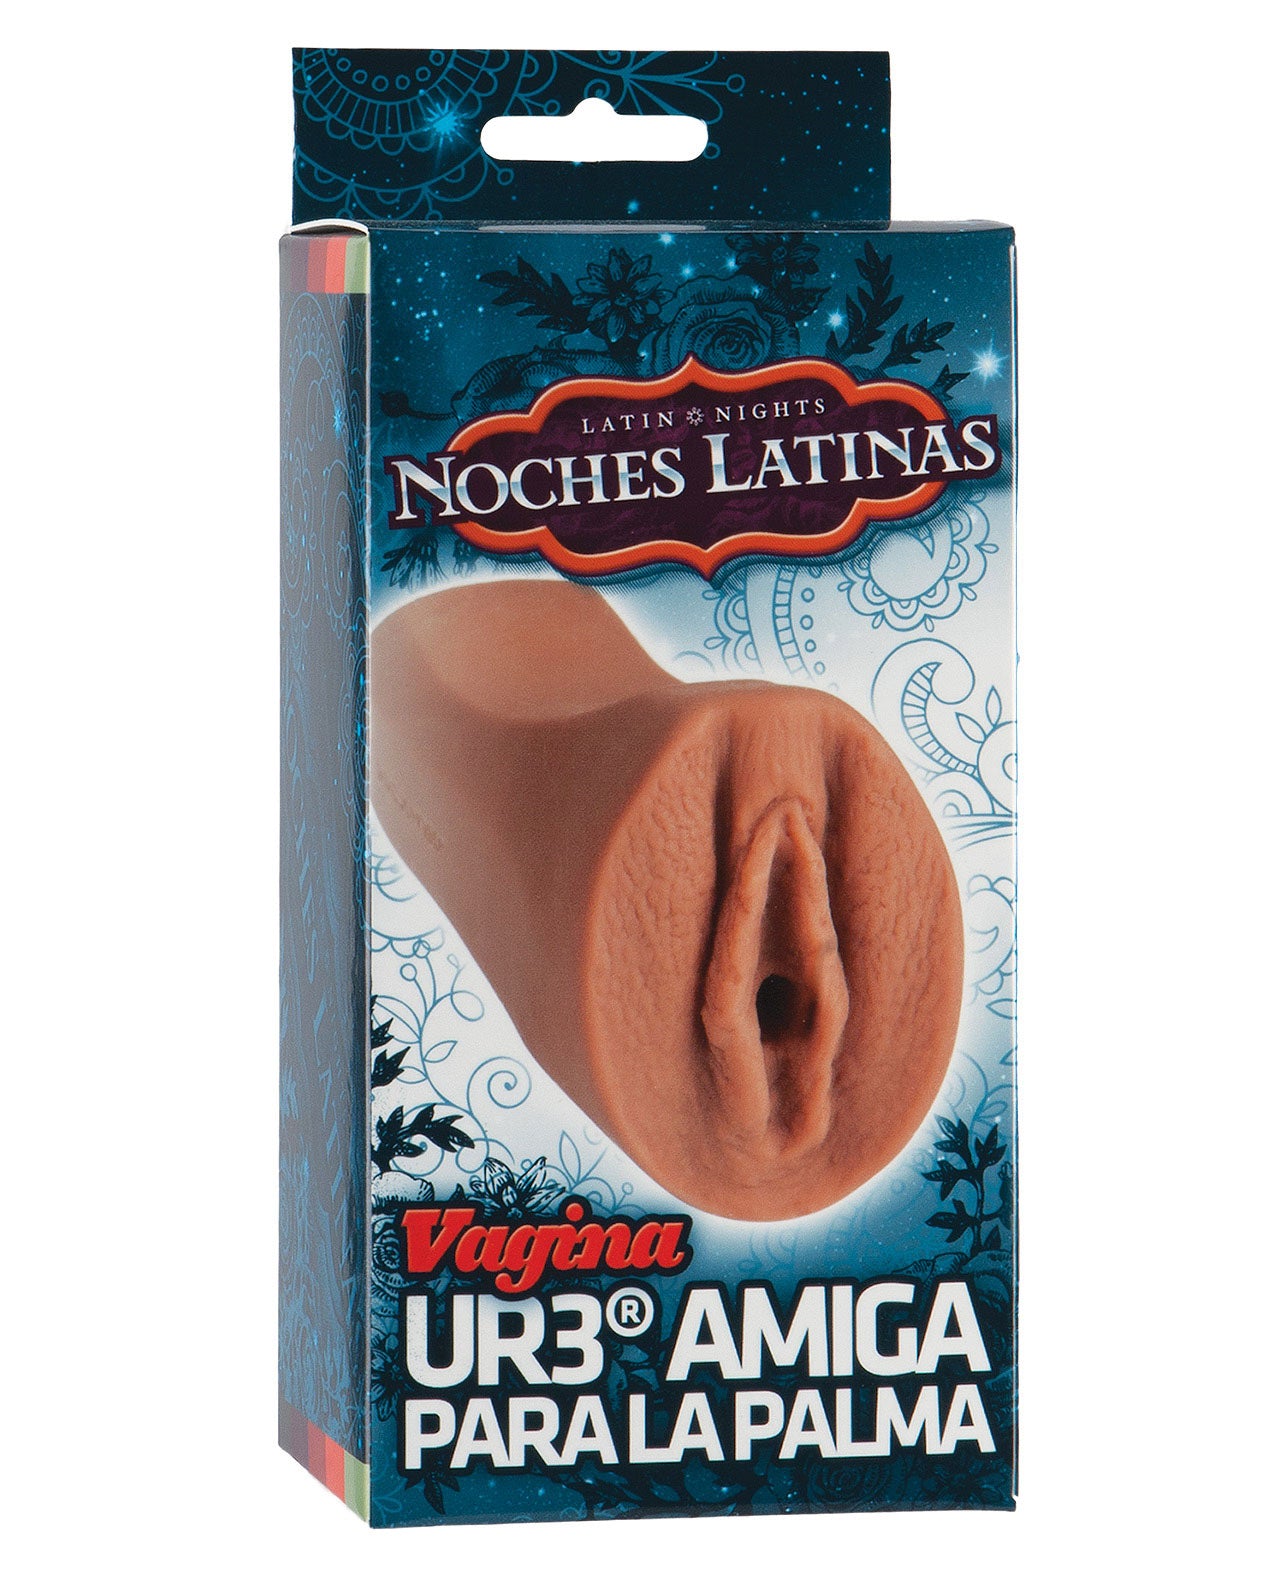 Noches Latinas Ultraskyn Amiga Parala La Palma Vagina - LUST Depot